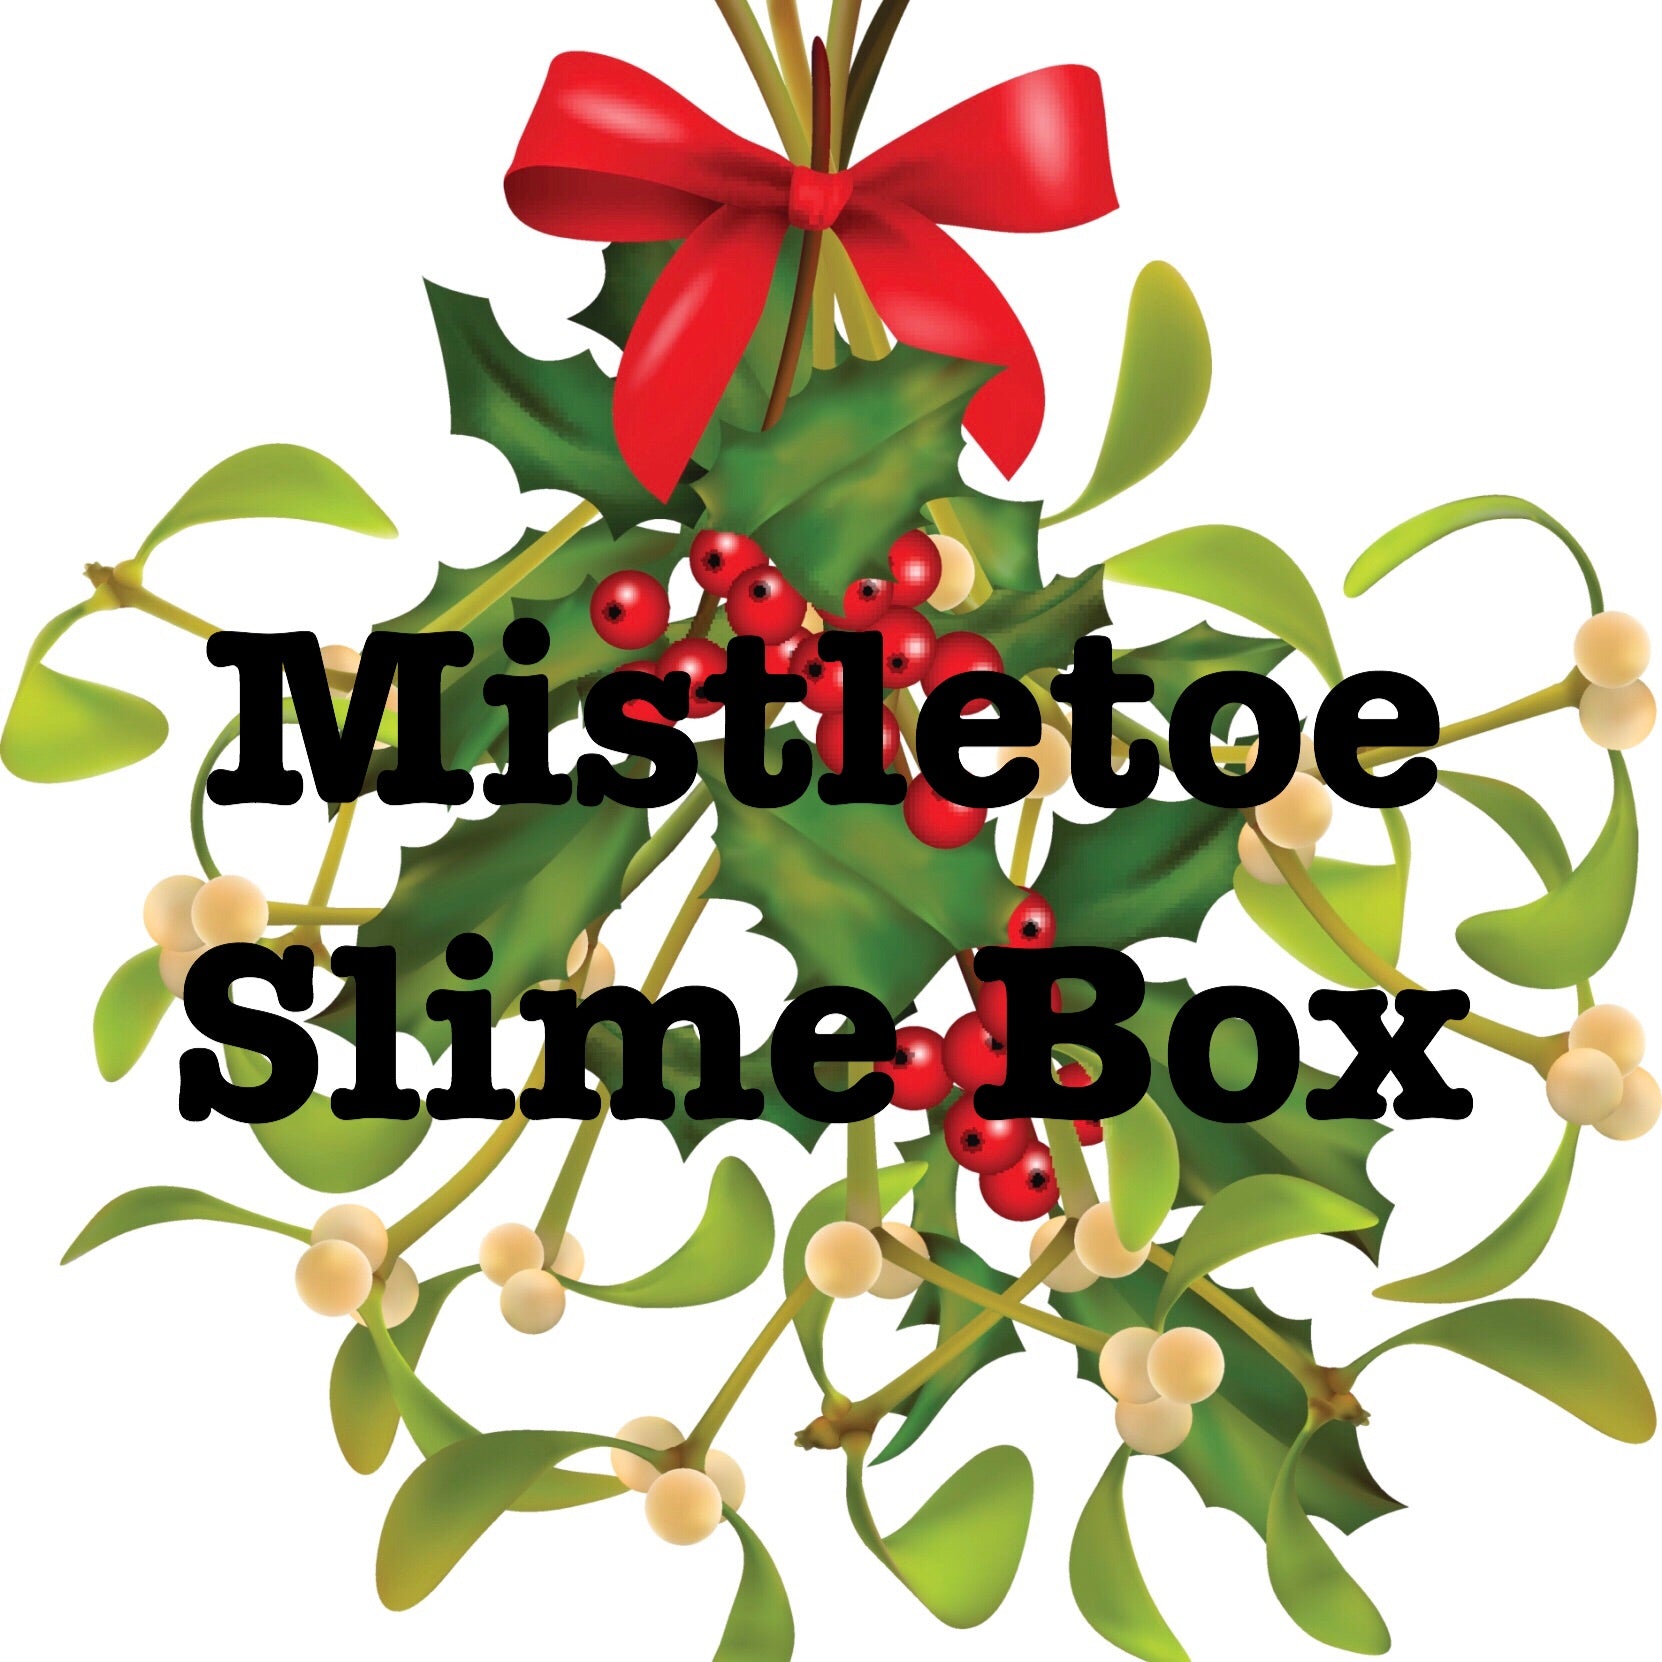 Mistletoe Slime Box